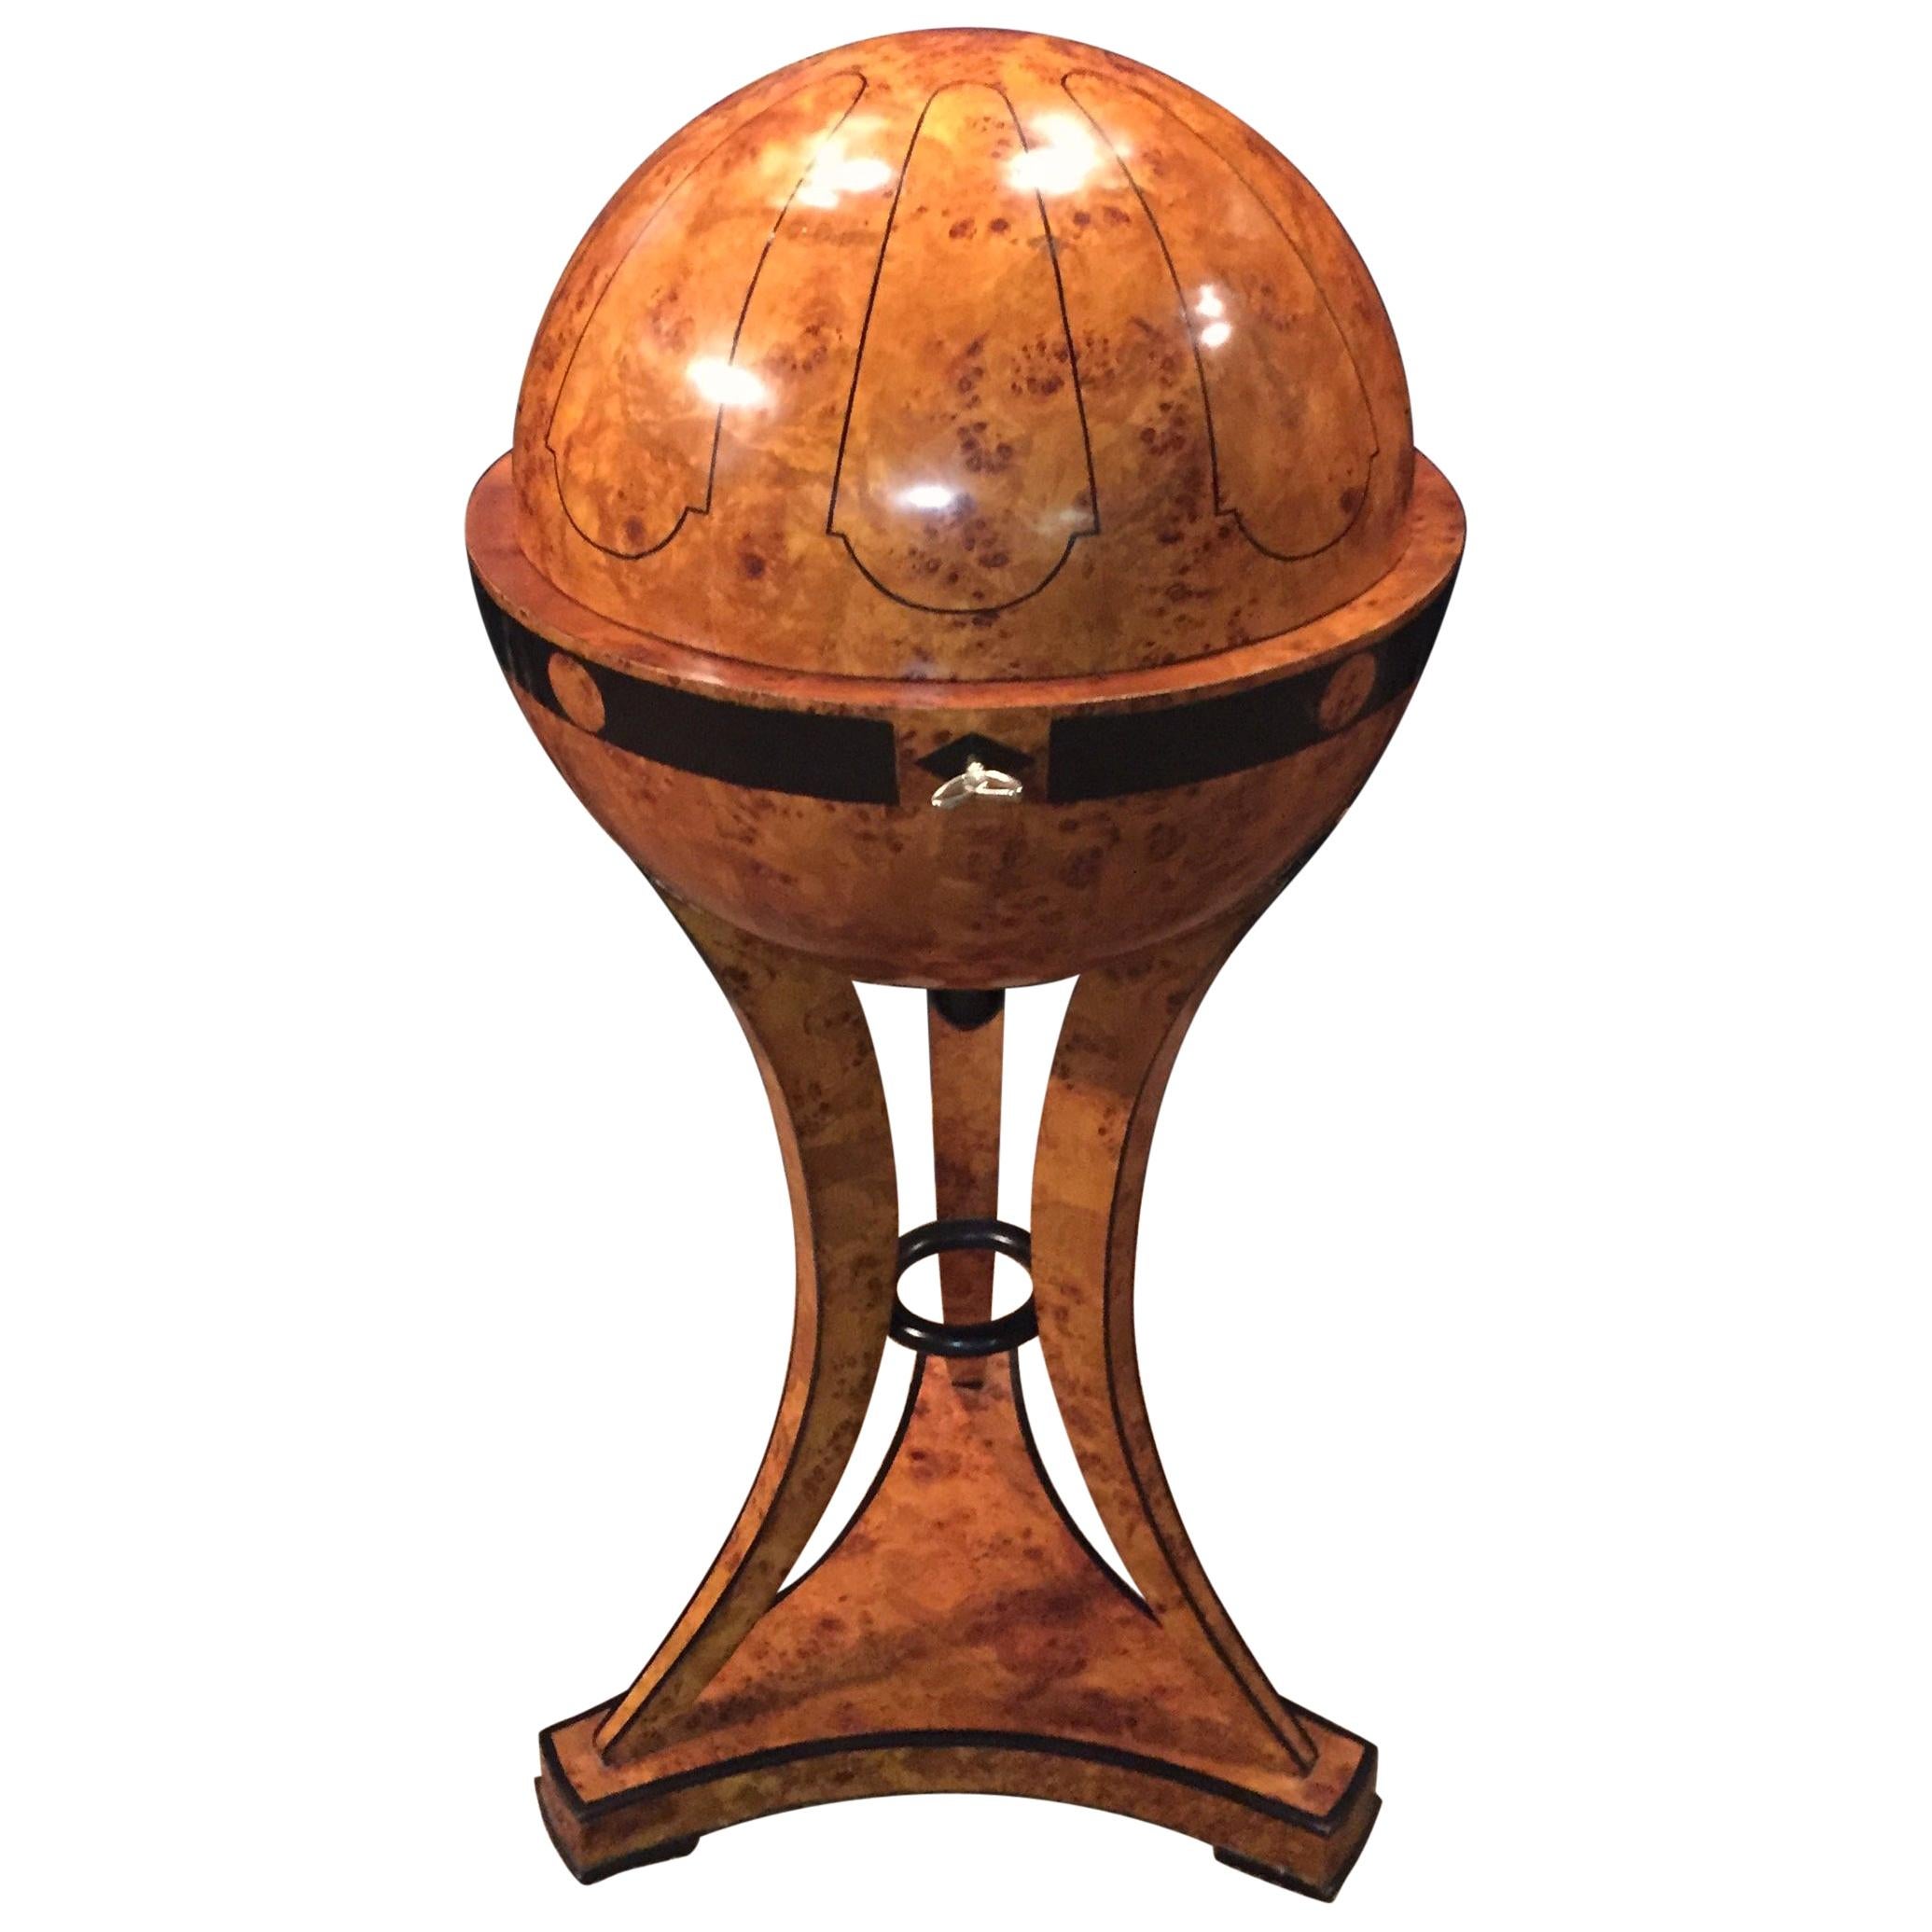 20th Century Vienna Biedermeier Style Globe Sewing Table